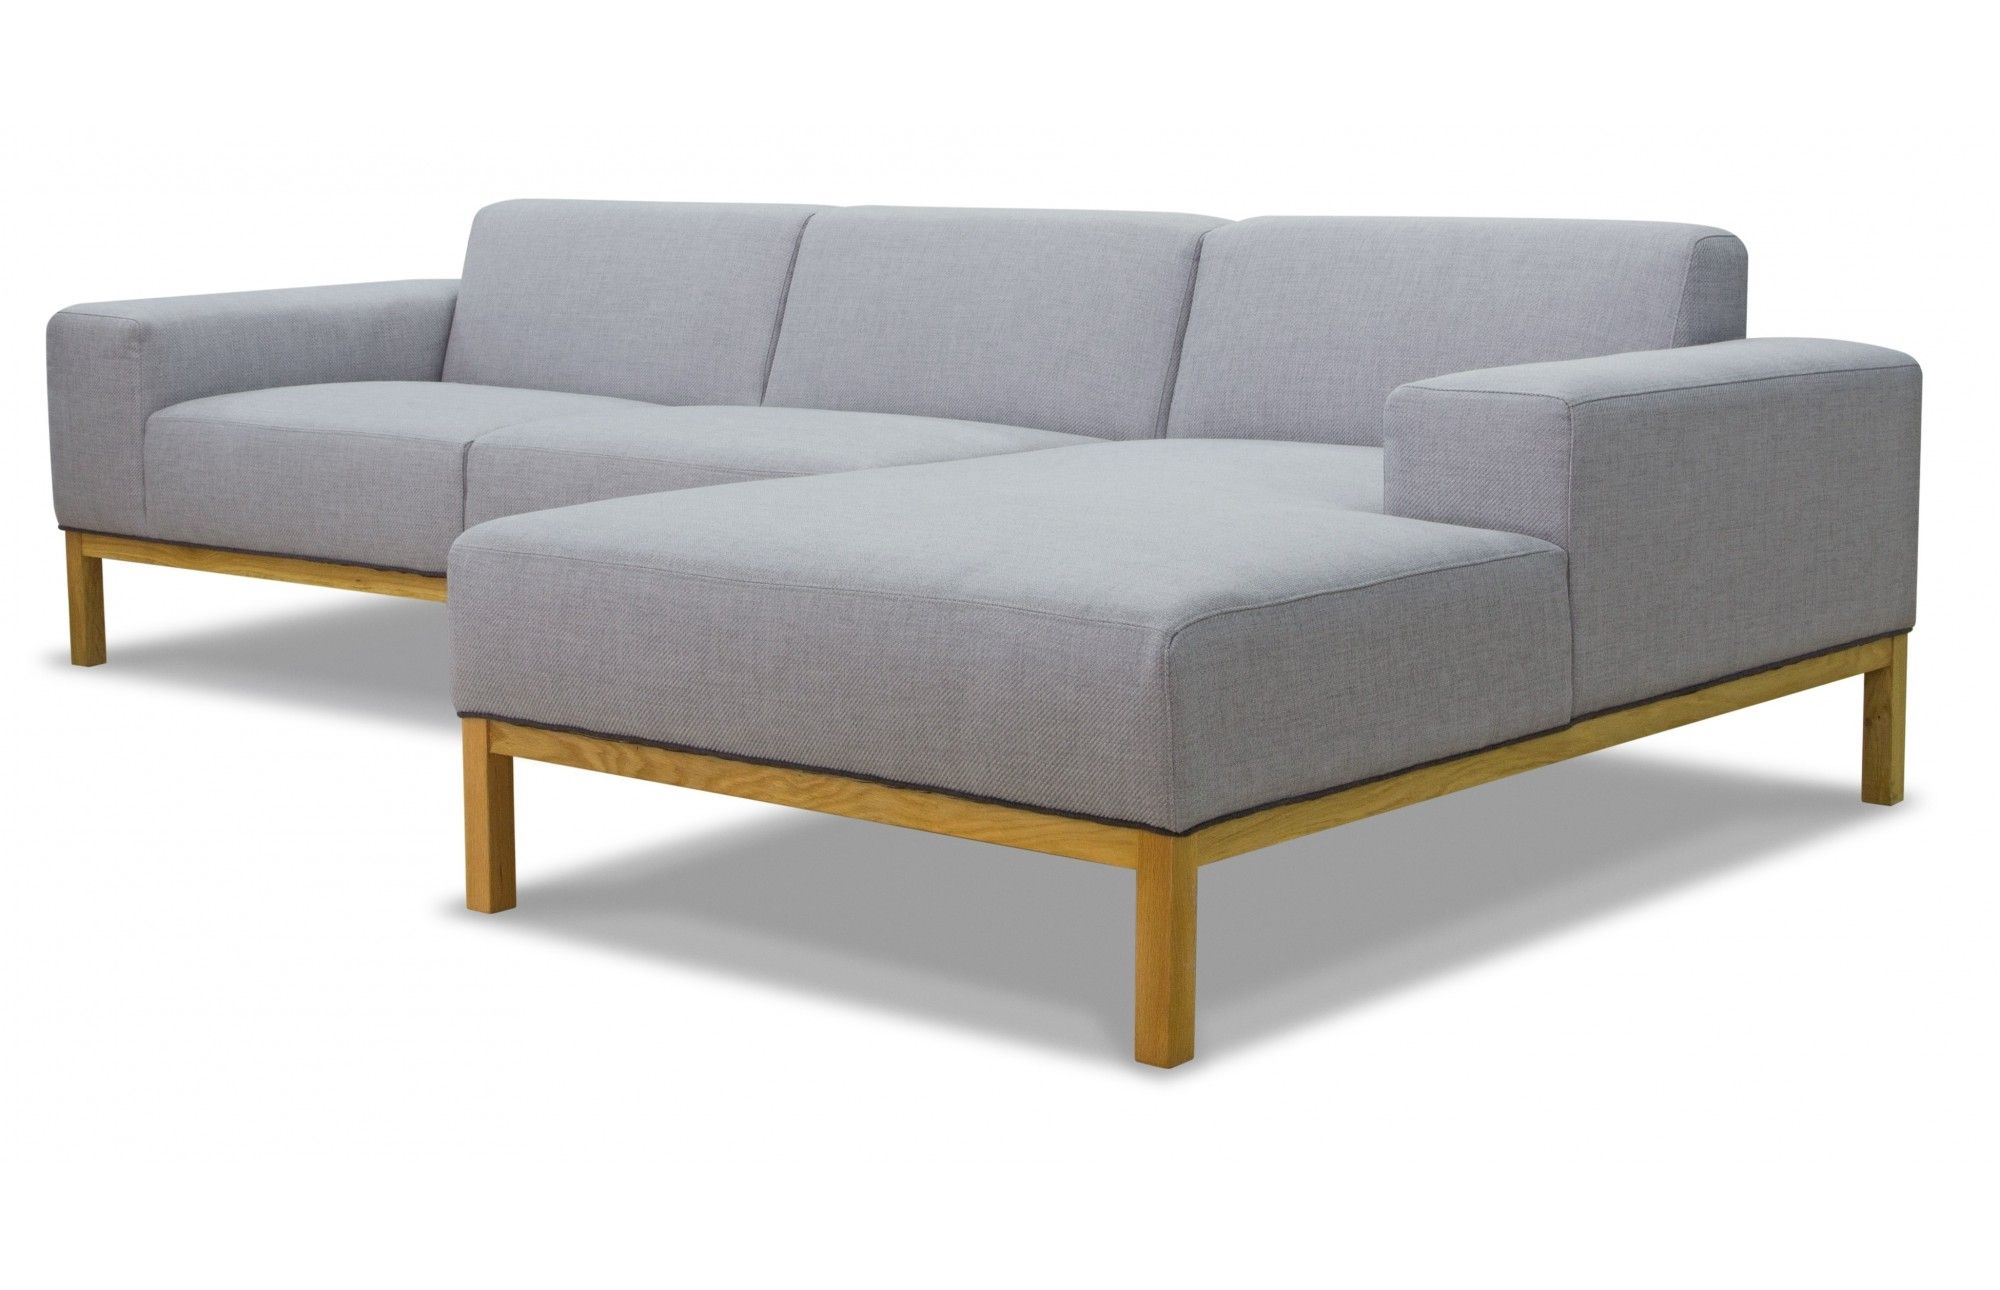 Buy Union Black Leather Modular Corner Sofas At Furniture Choice With Regard To Modular Corner Sofas (View 2 of 15)